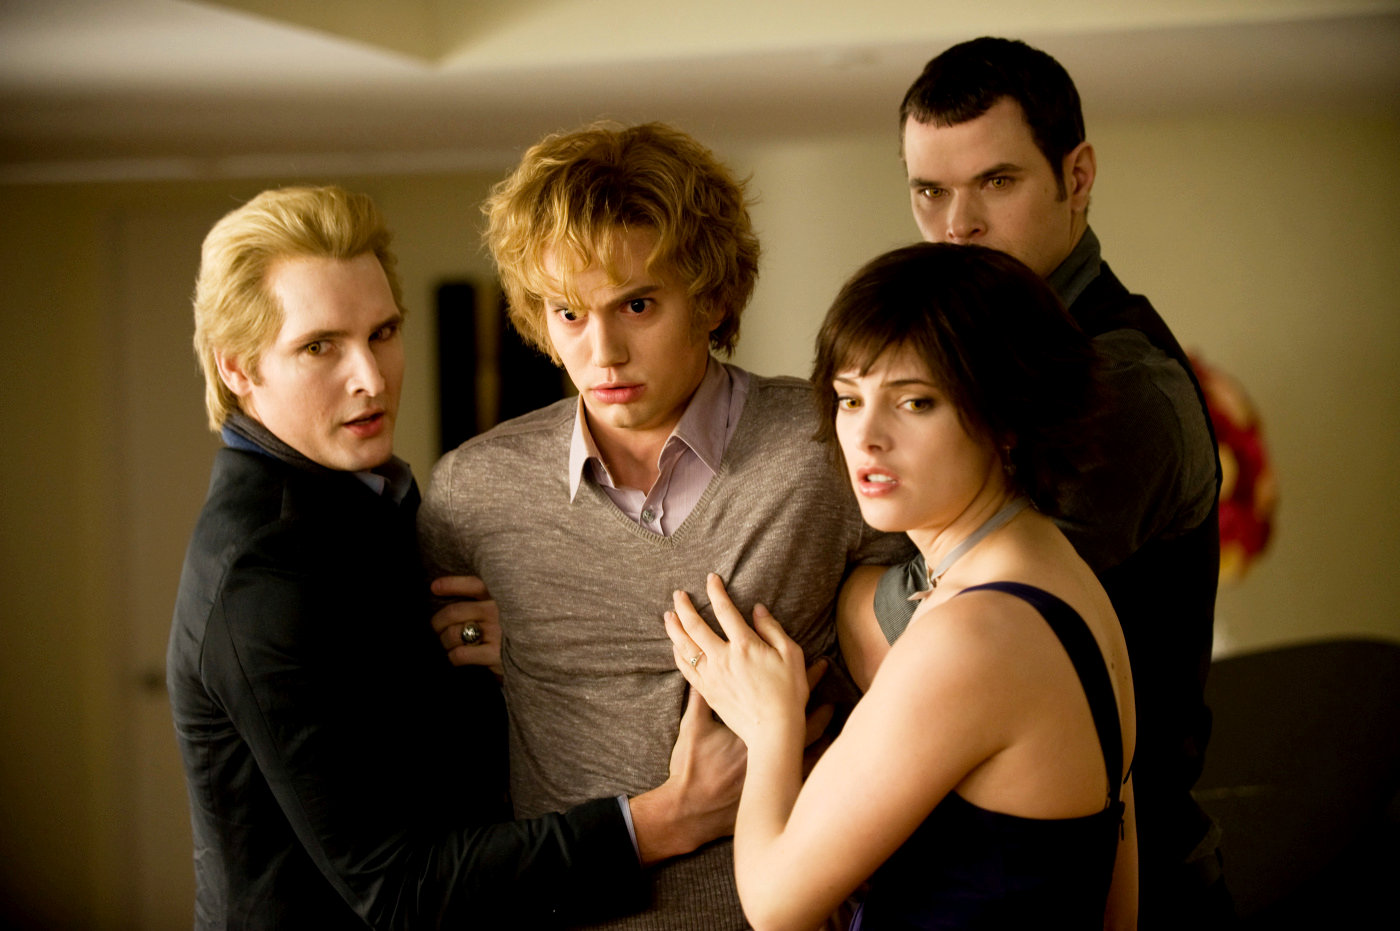 Peter Facinelli, Jackson Rathbone, Ashley Greene and Kellan Lutz in Summit Entertainment's The Twilight Saga's New Moon (2009)